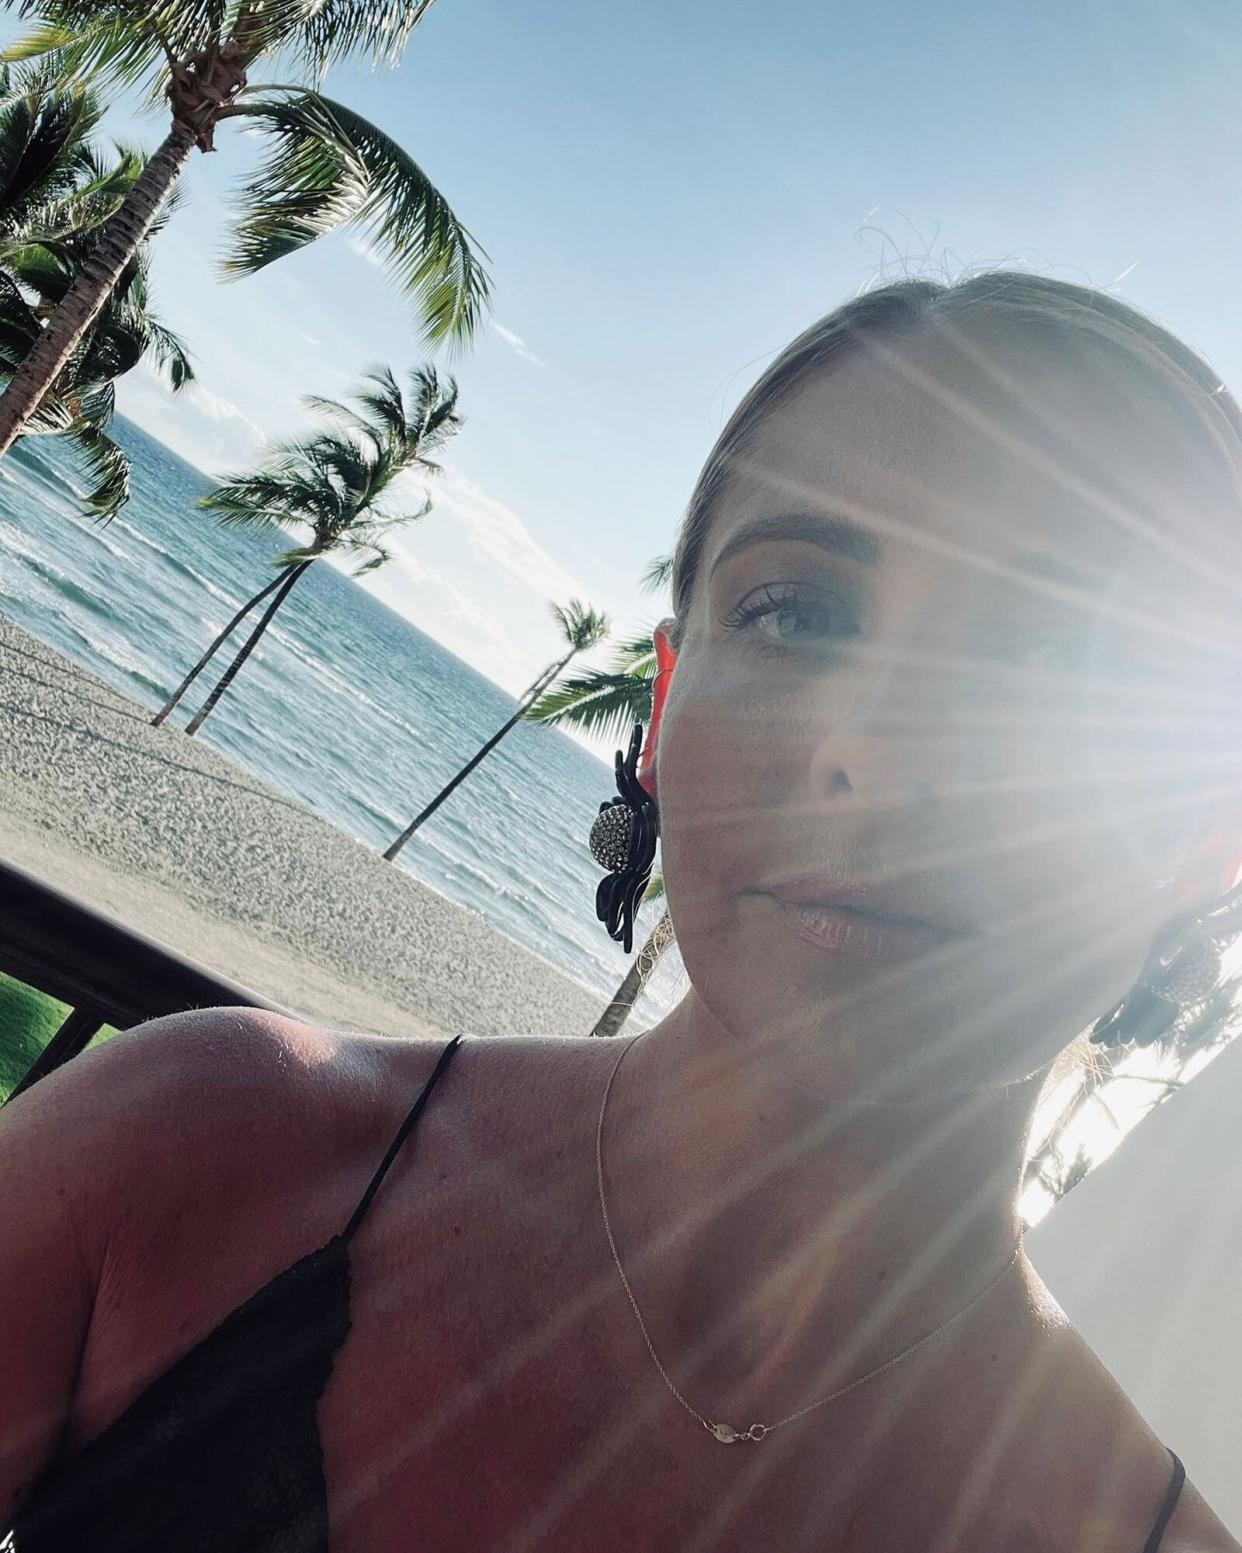 Sarah Michelle Gellar Jokes About Already Missing Her 'Paradise' Vacation. https://www.instagram.com/p/ChfIrn-r1NN/.